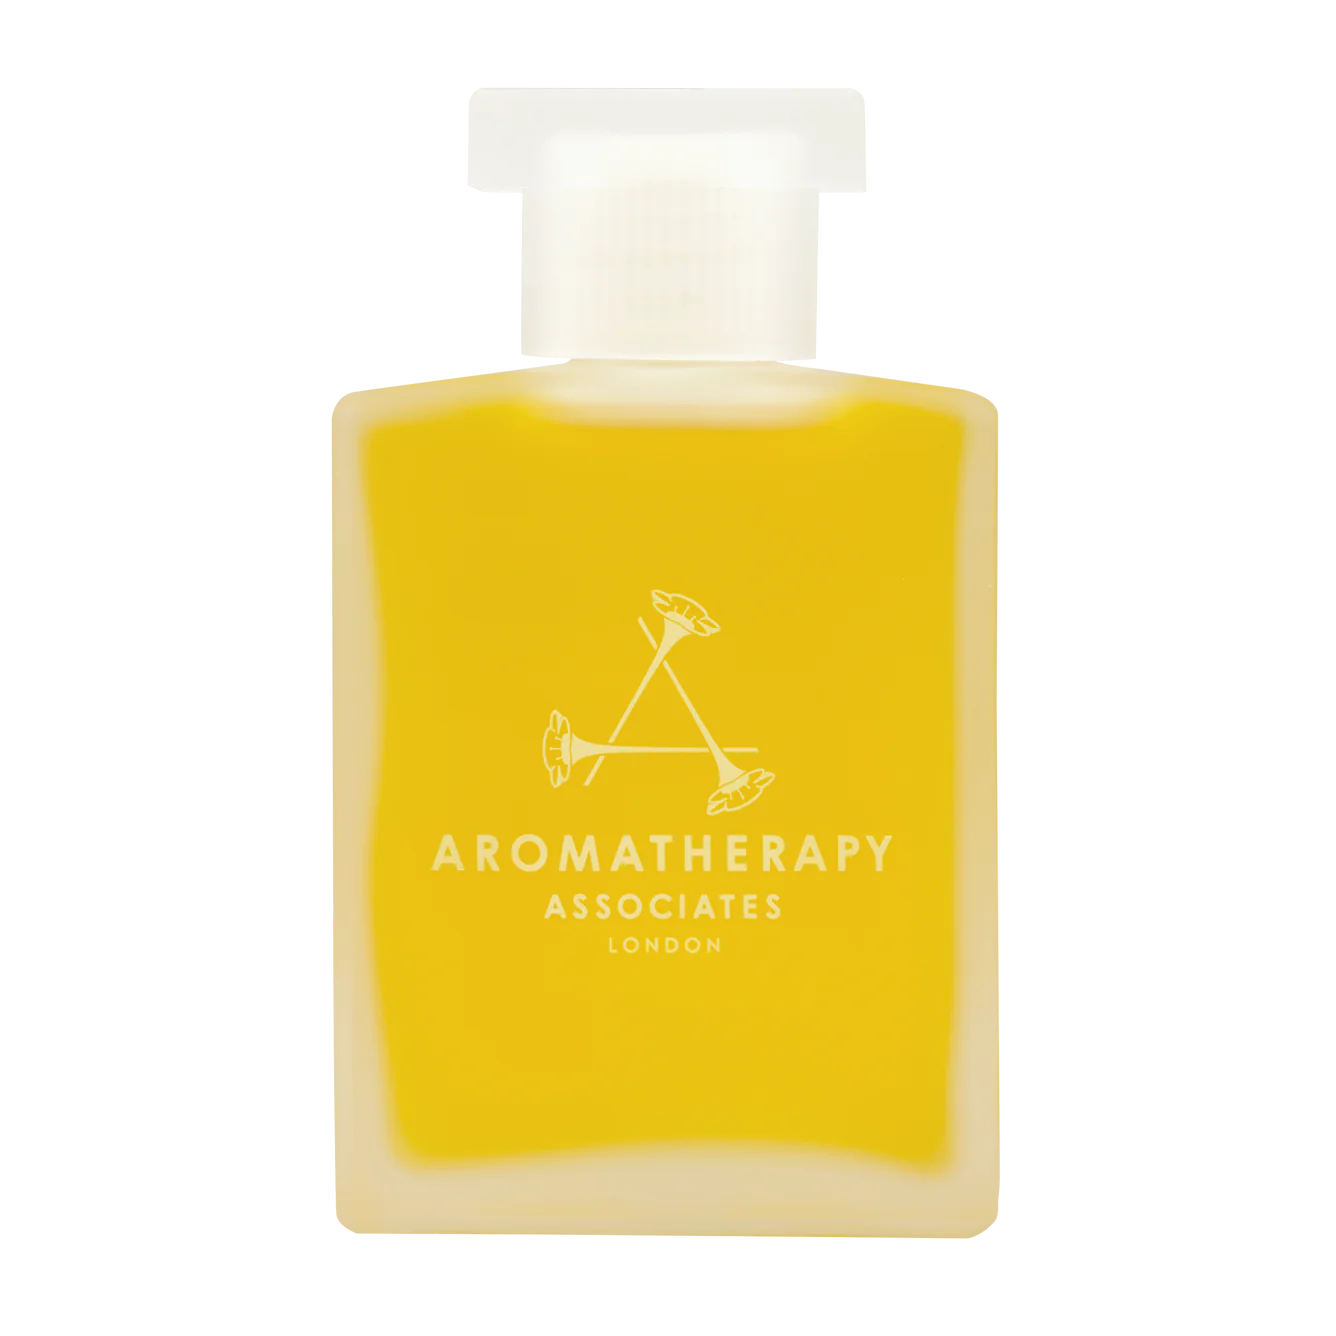 Aromatherapy Associates De-Stress Mind Bath & Shower Oil 55ml